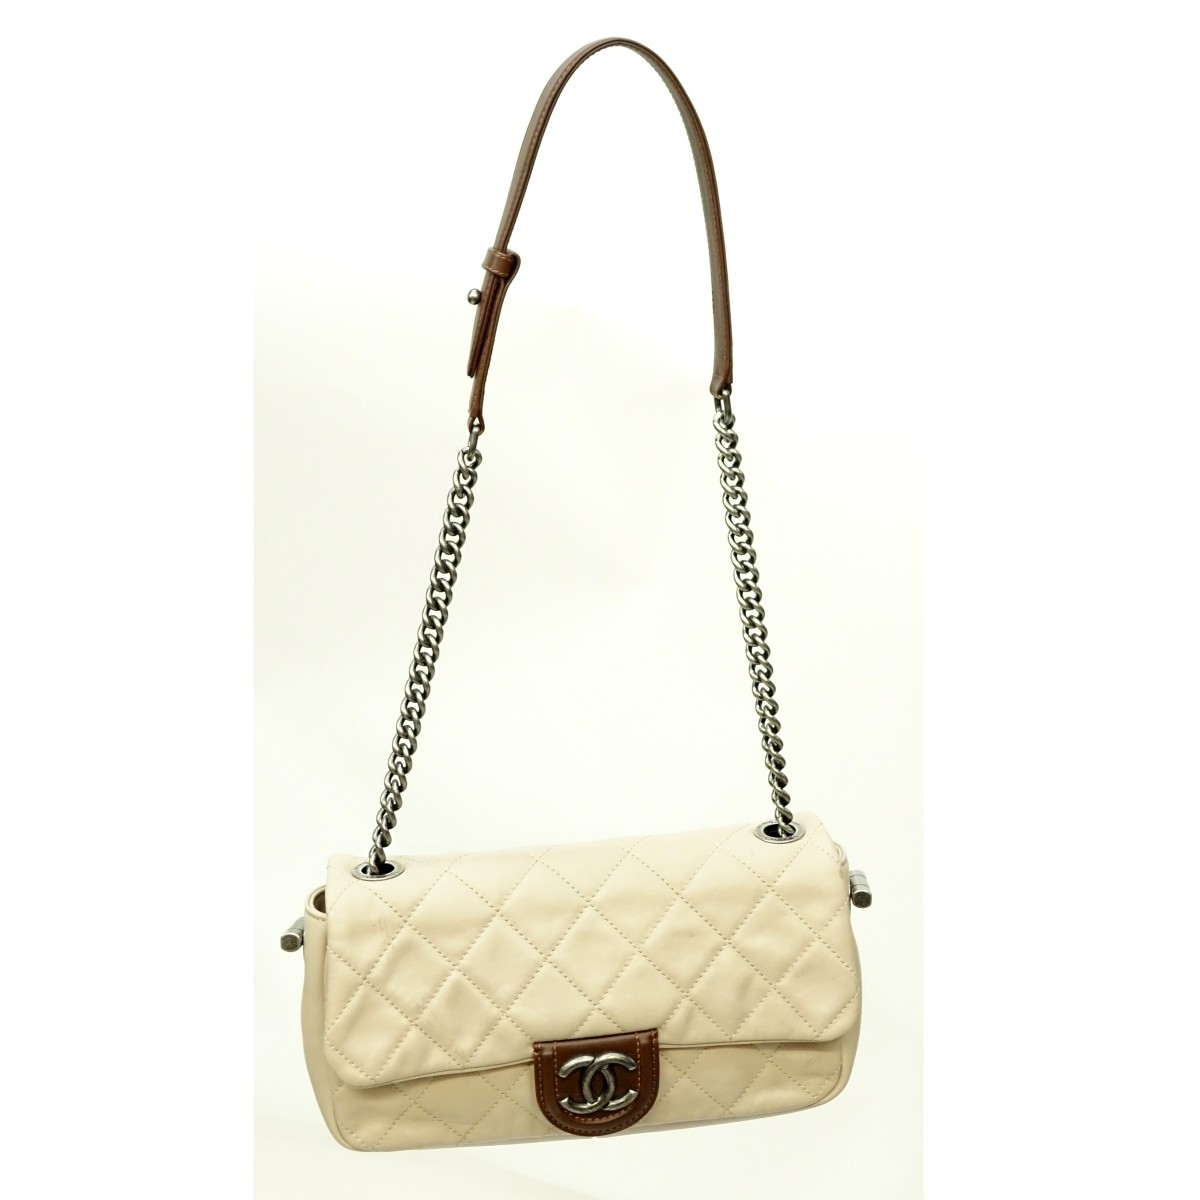 Chanel Beige Leather Rectangular Single Flap Bag